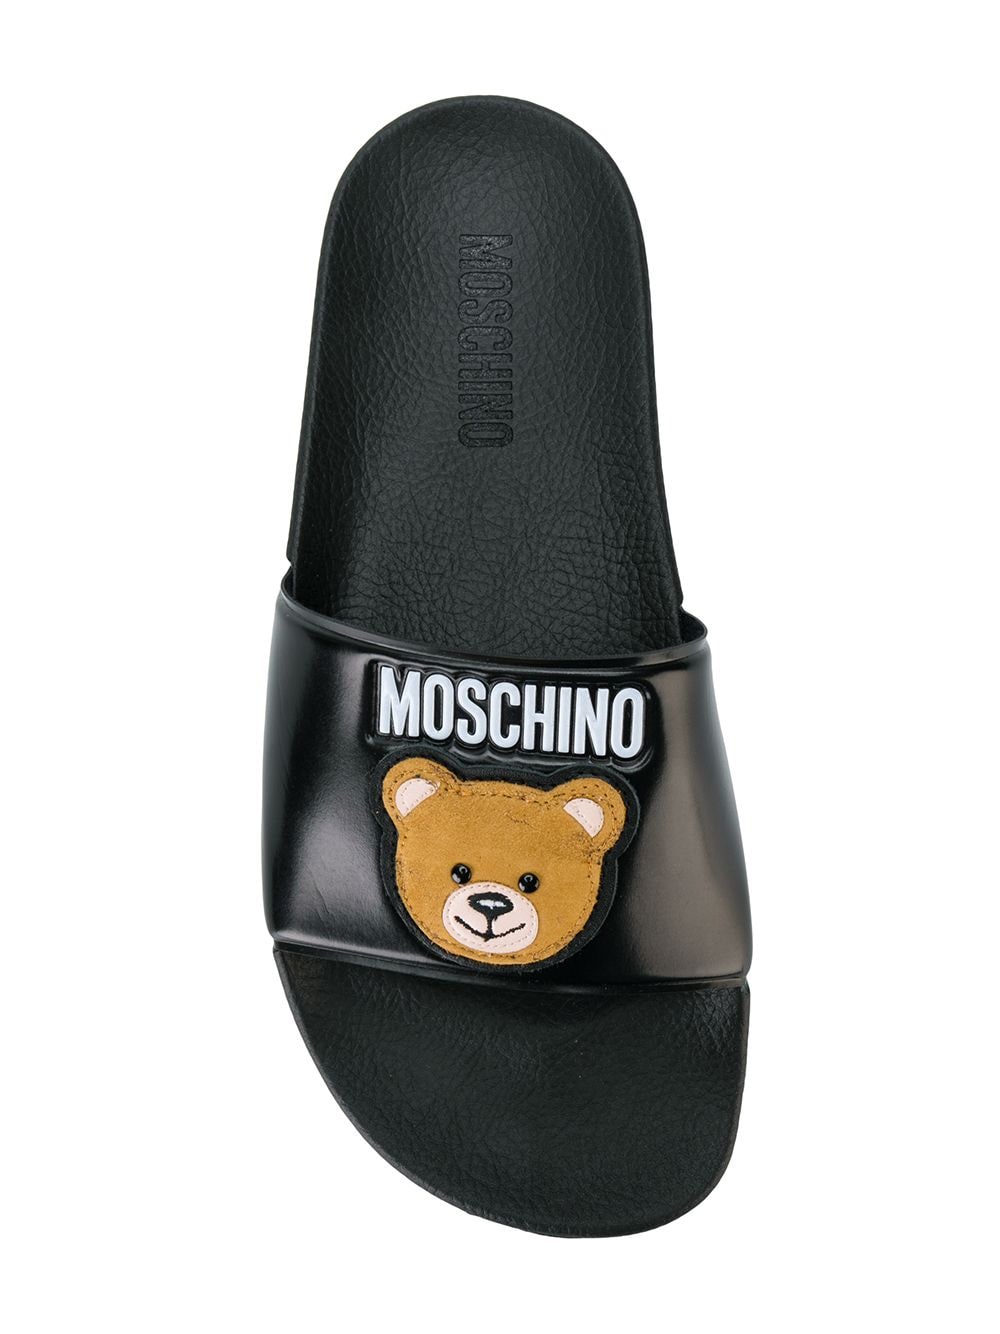 Moschino Teddy Bear Slides $195 - Buy 